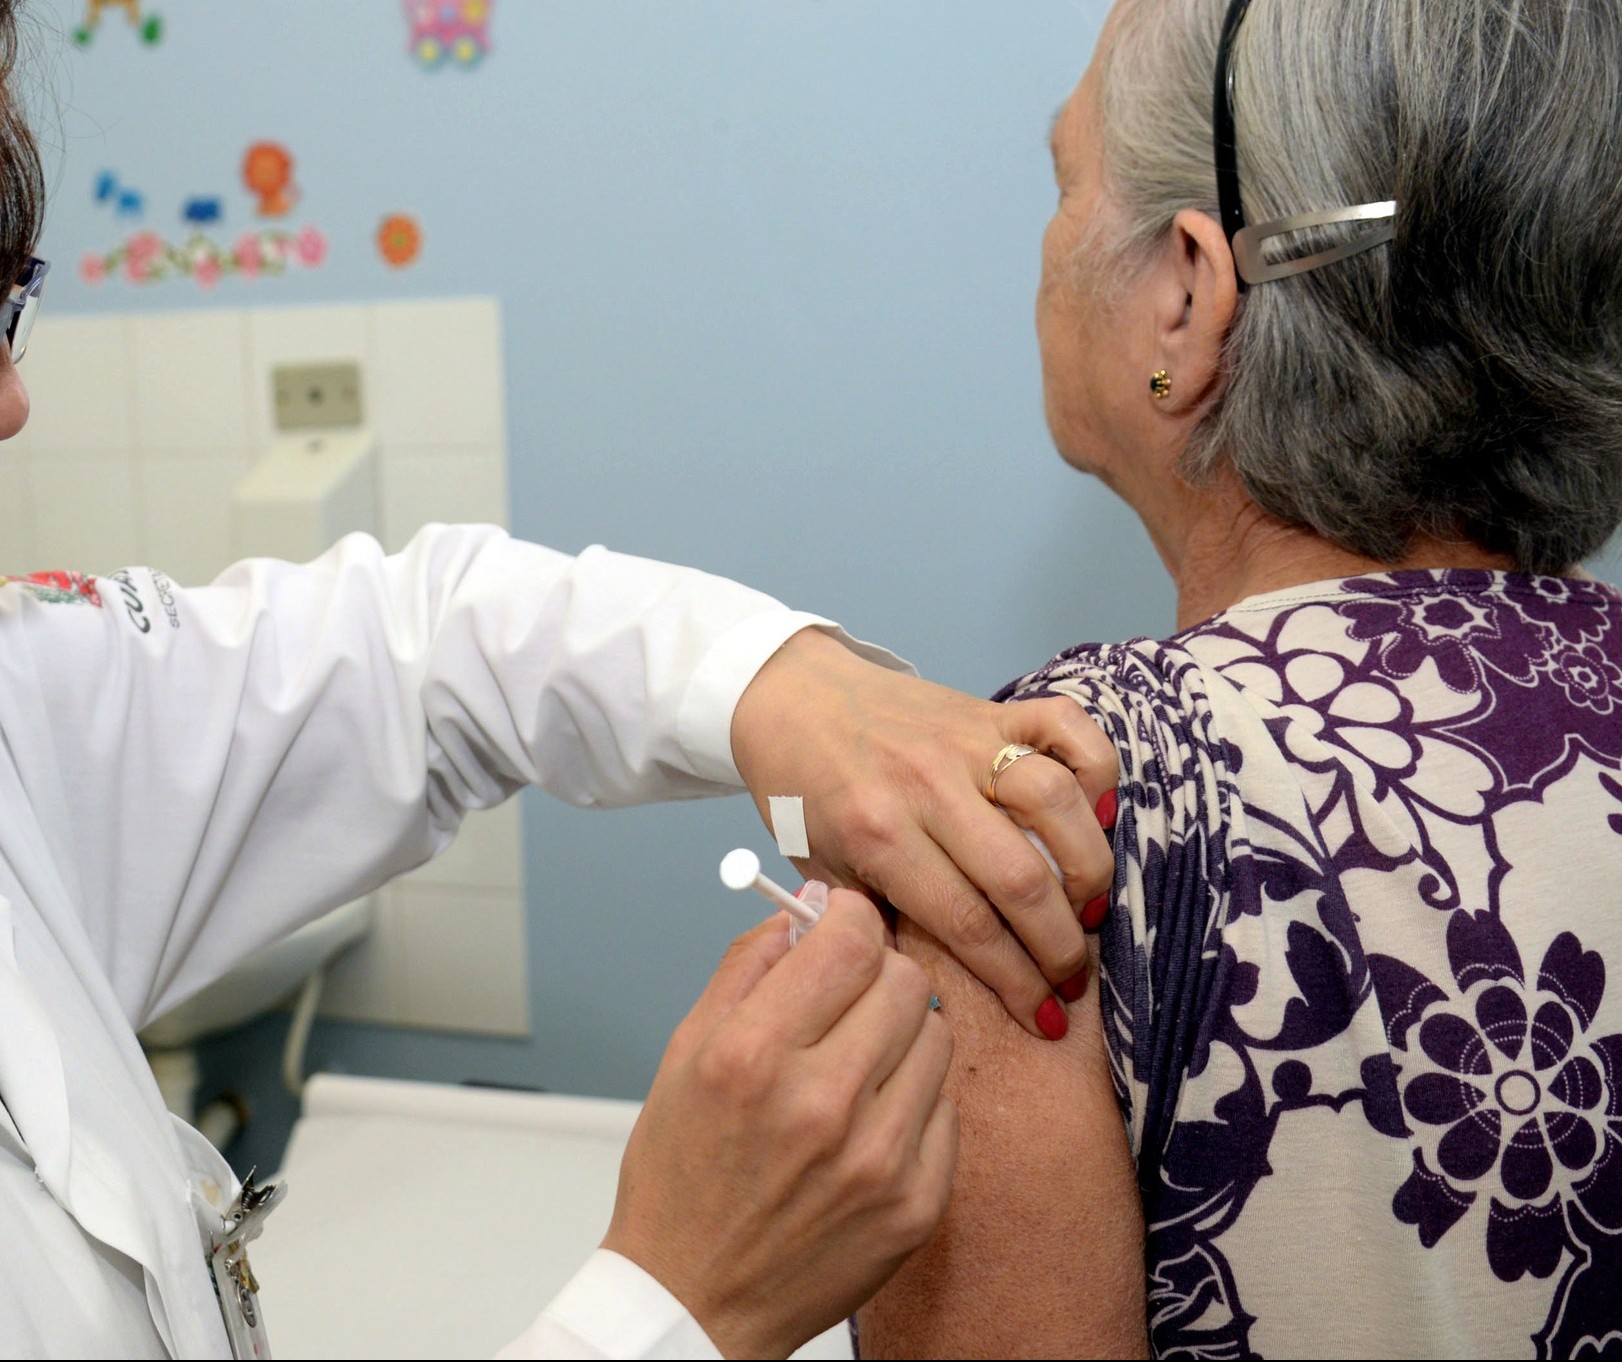 Maringá deve liberar 6 mil doses da vacina a partir de segunda-feira (3)